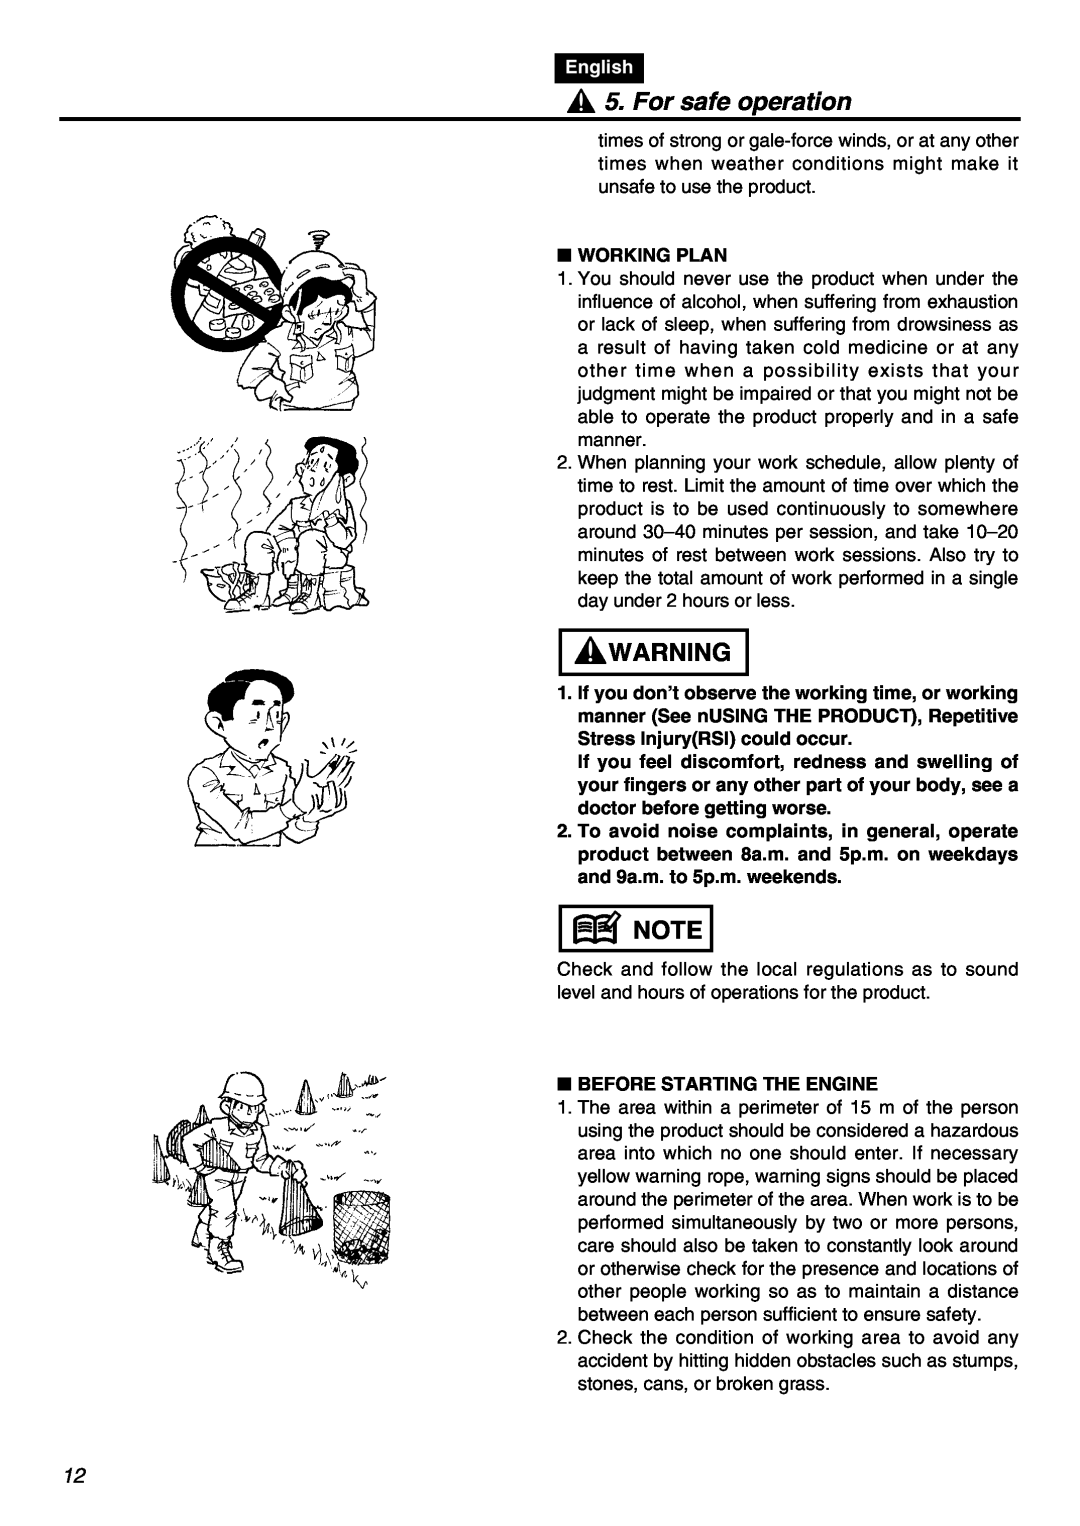 RedMax SRTZ2401F manual For safe operation, English, Working Plan 